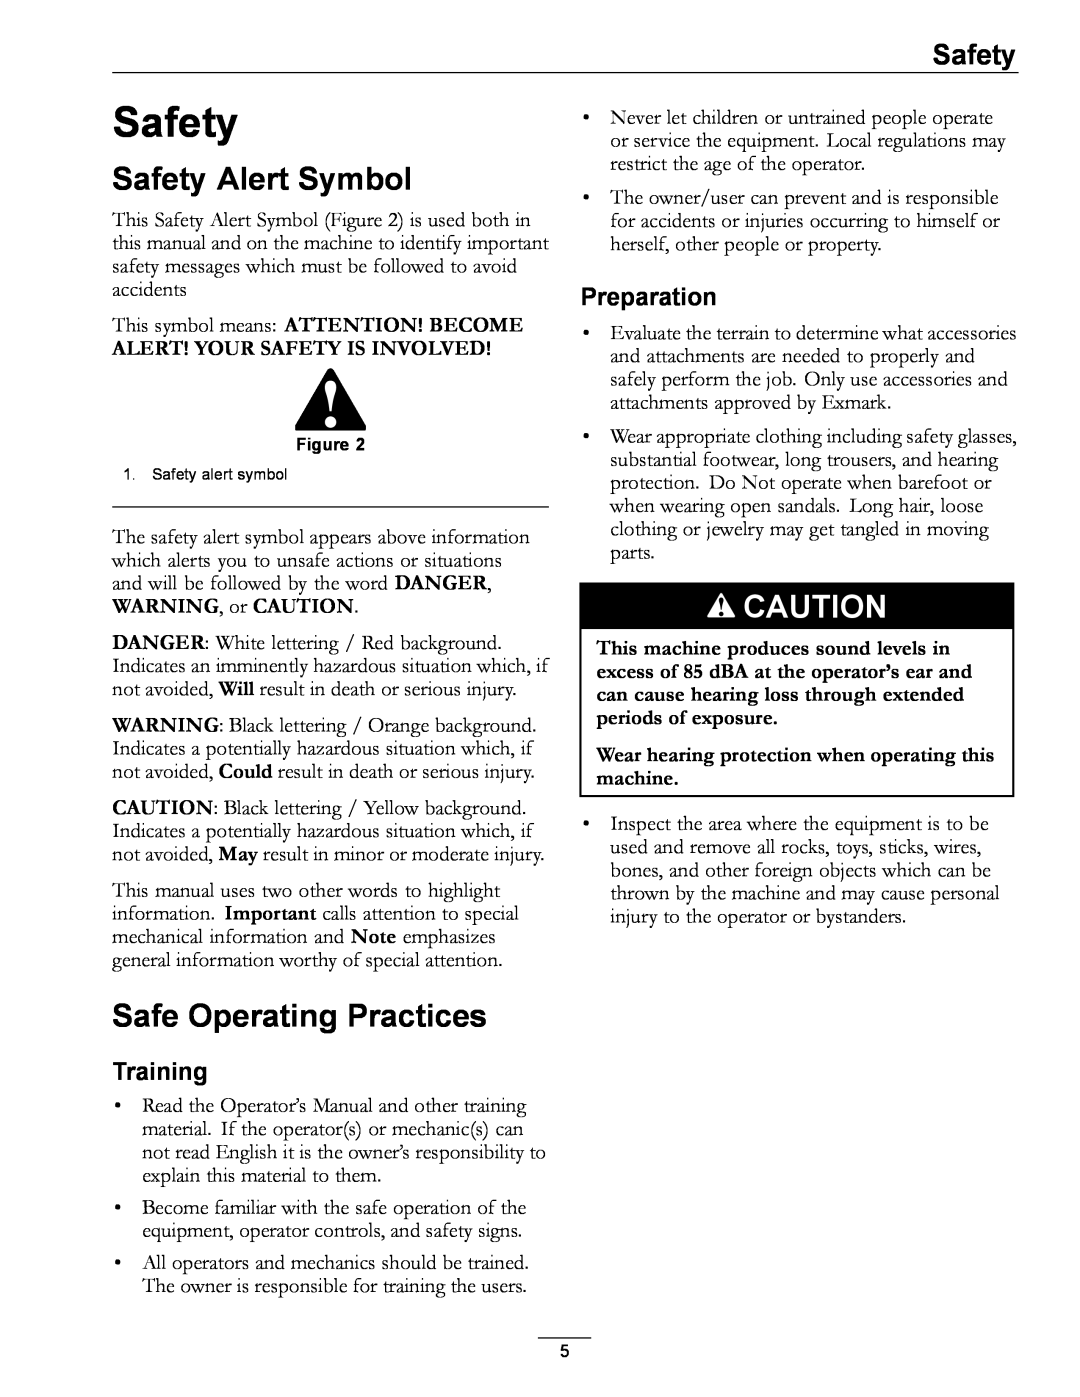 Exmark 4500-352 Safety Alert Symbol, Safe Operating Practices, Training, Preparation, Alert! Your Safety Is Involved 